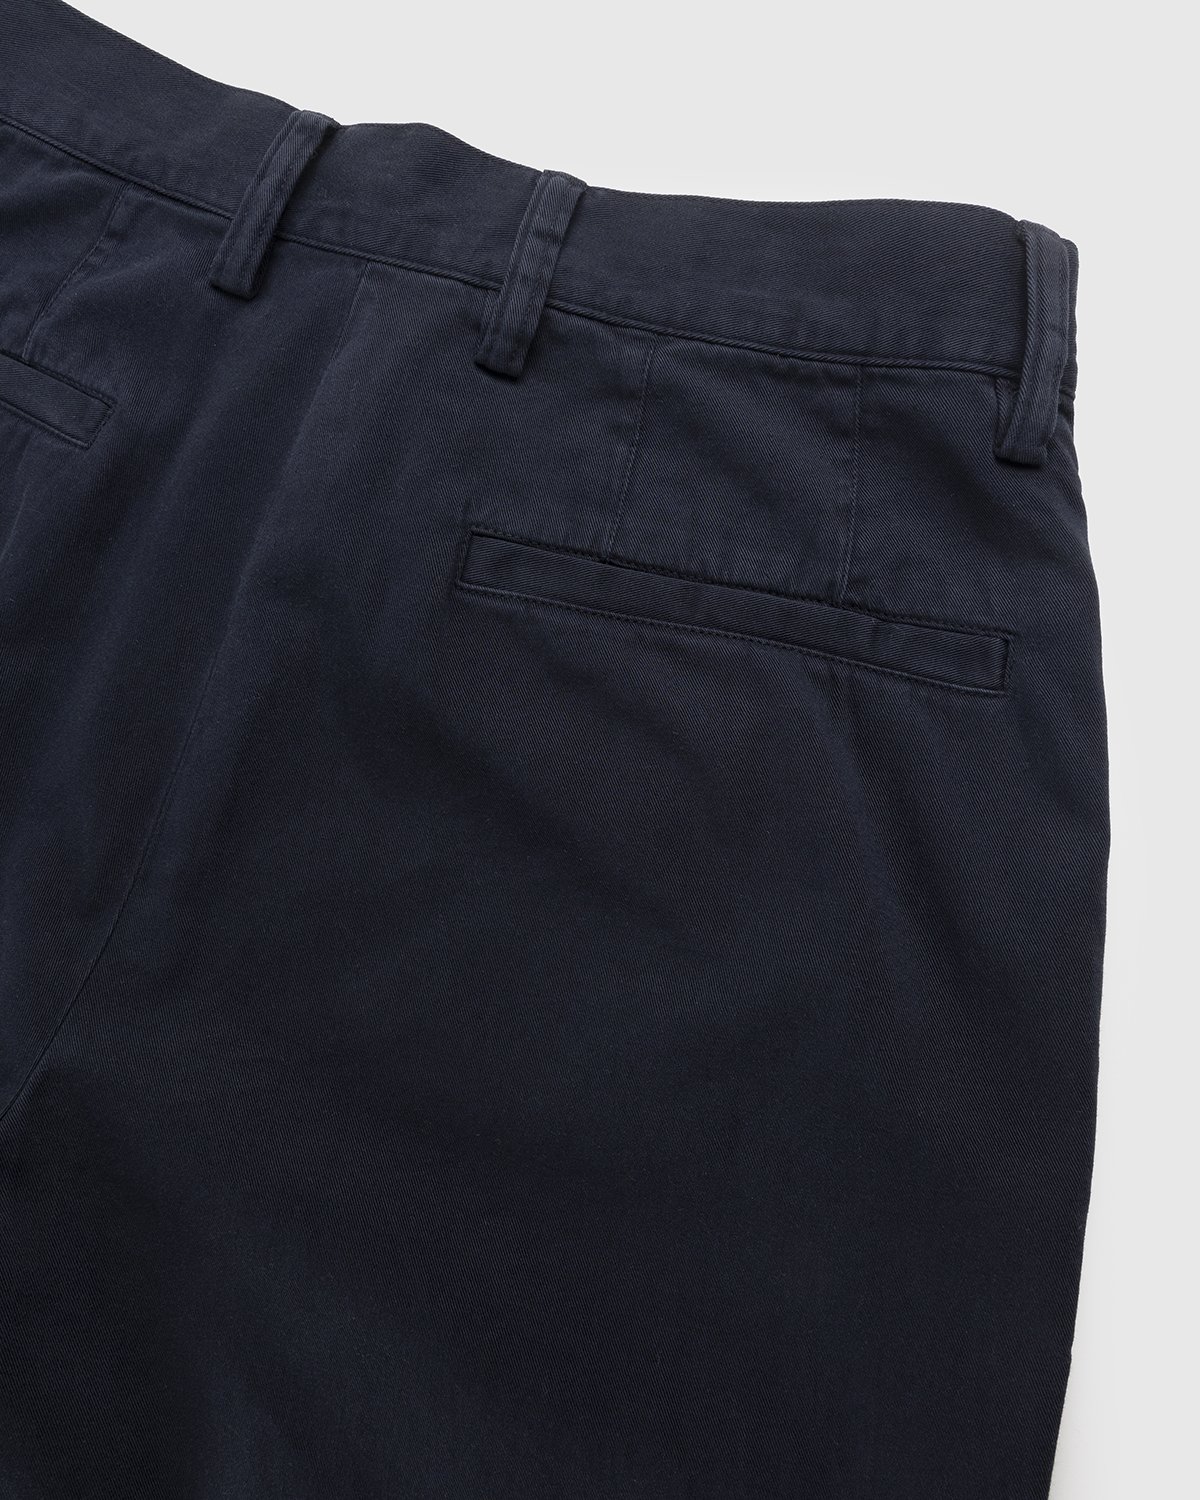 Dries van Noten - Pilson Pants Navy - Clothing - Blue - Image 3